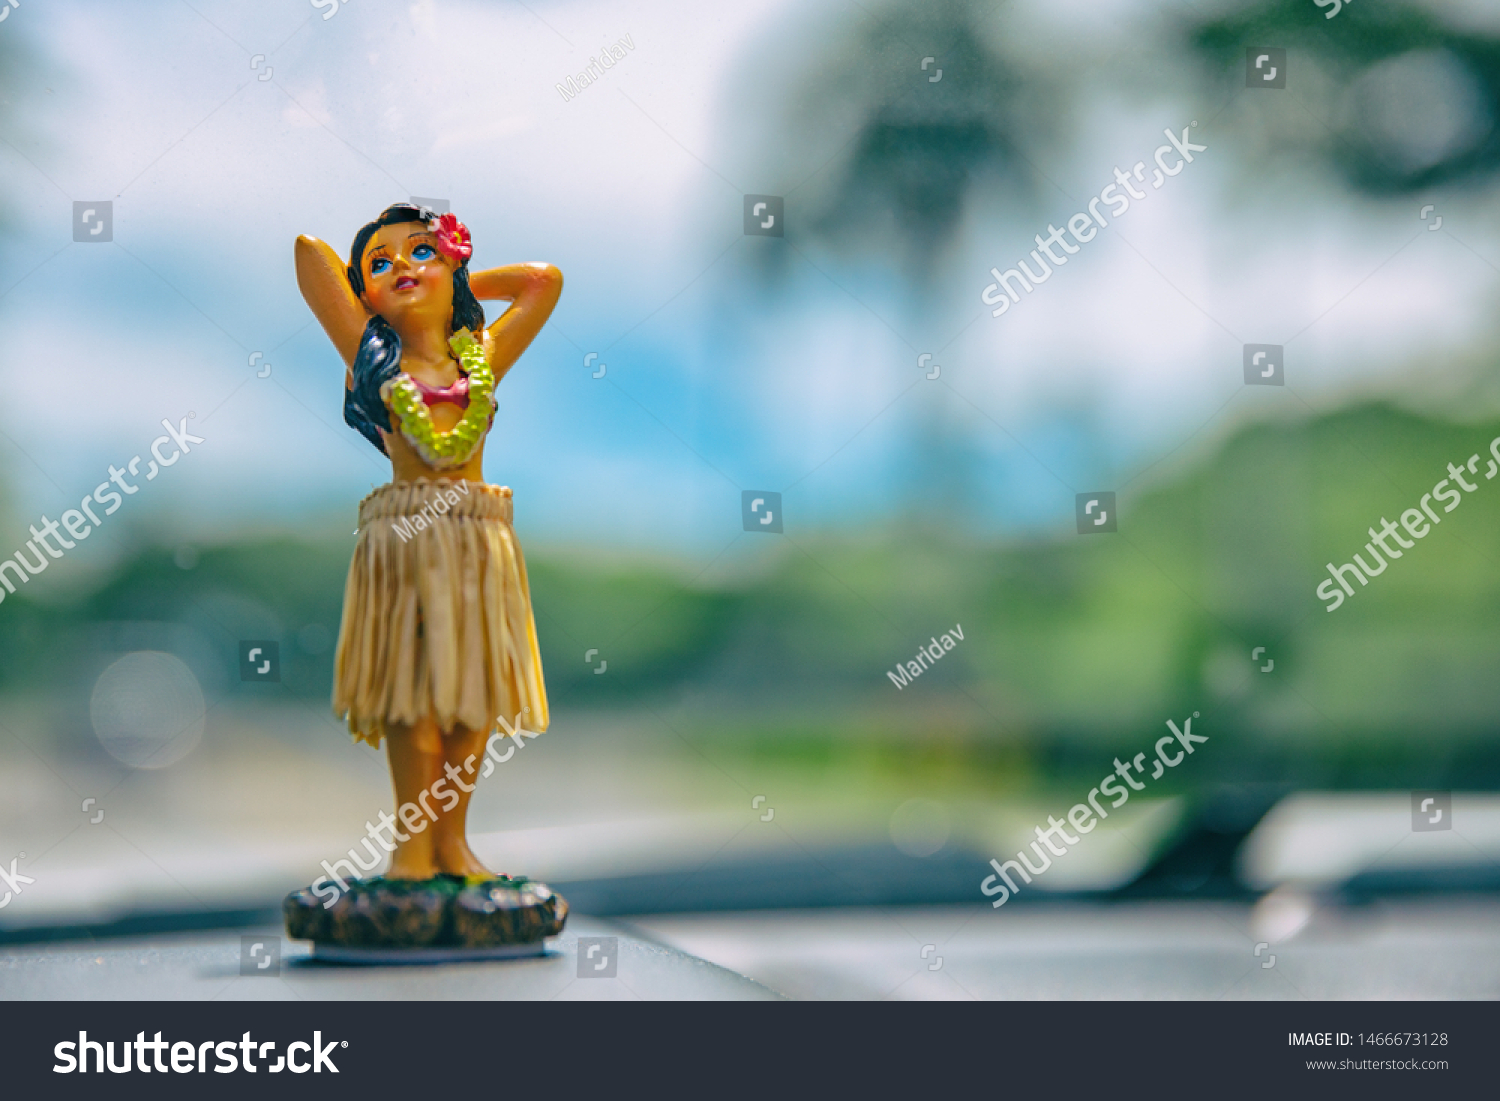 dancing doll for car dashboard